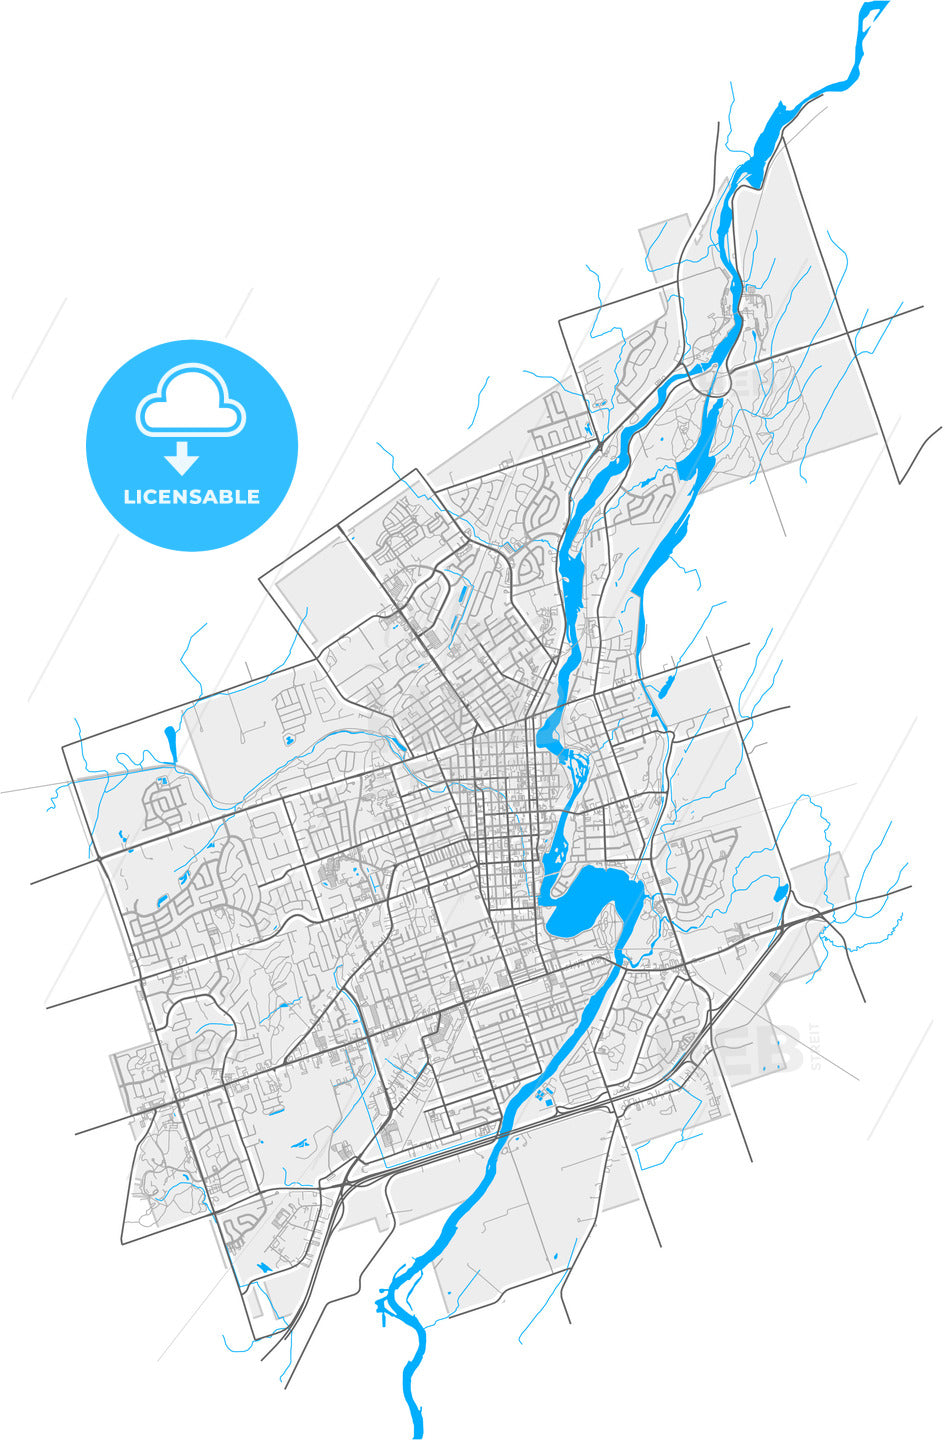 Peterborough, Ontario, Canada, high quality vector map